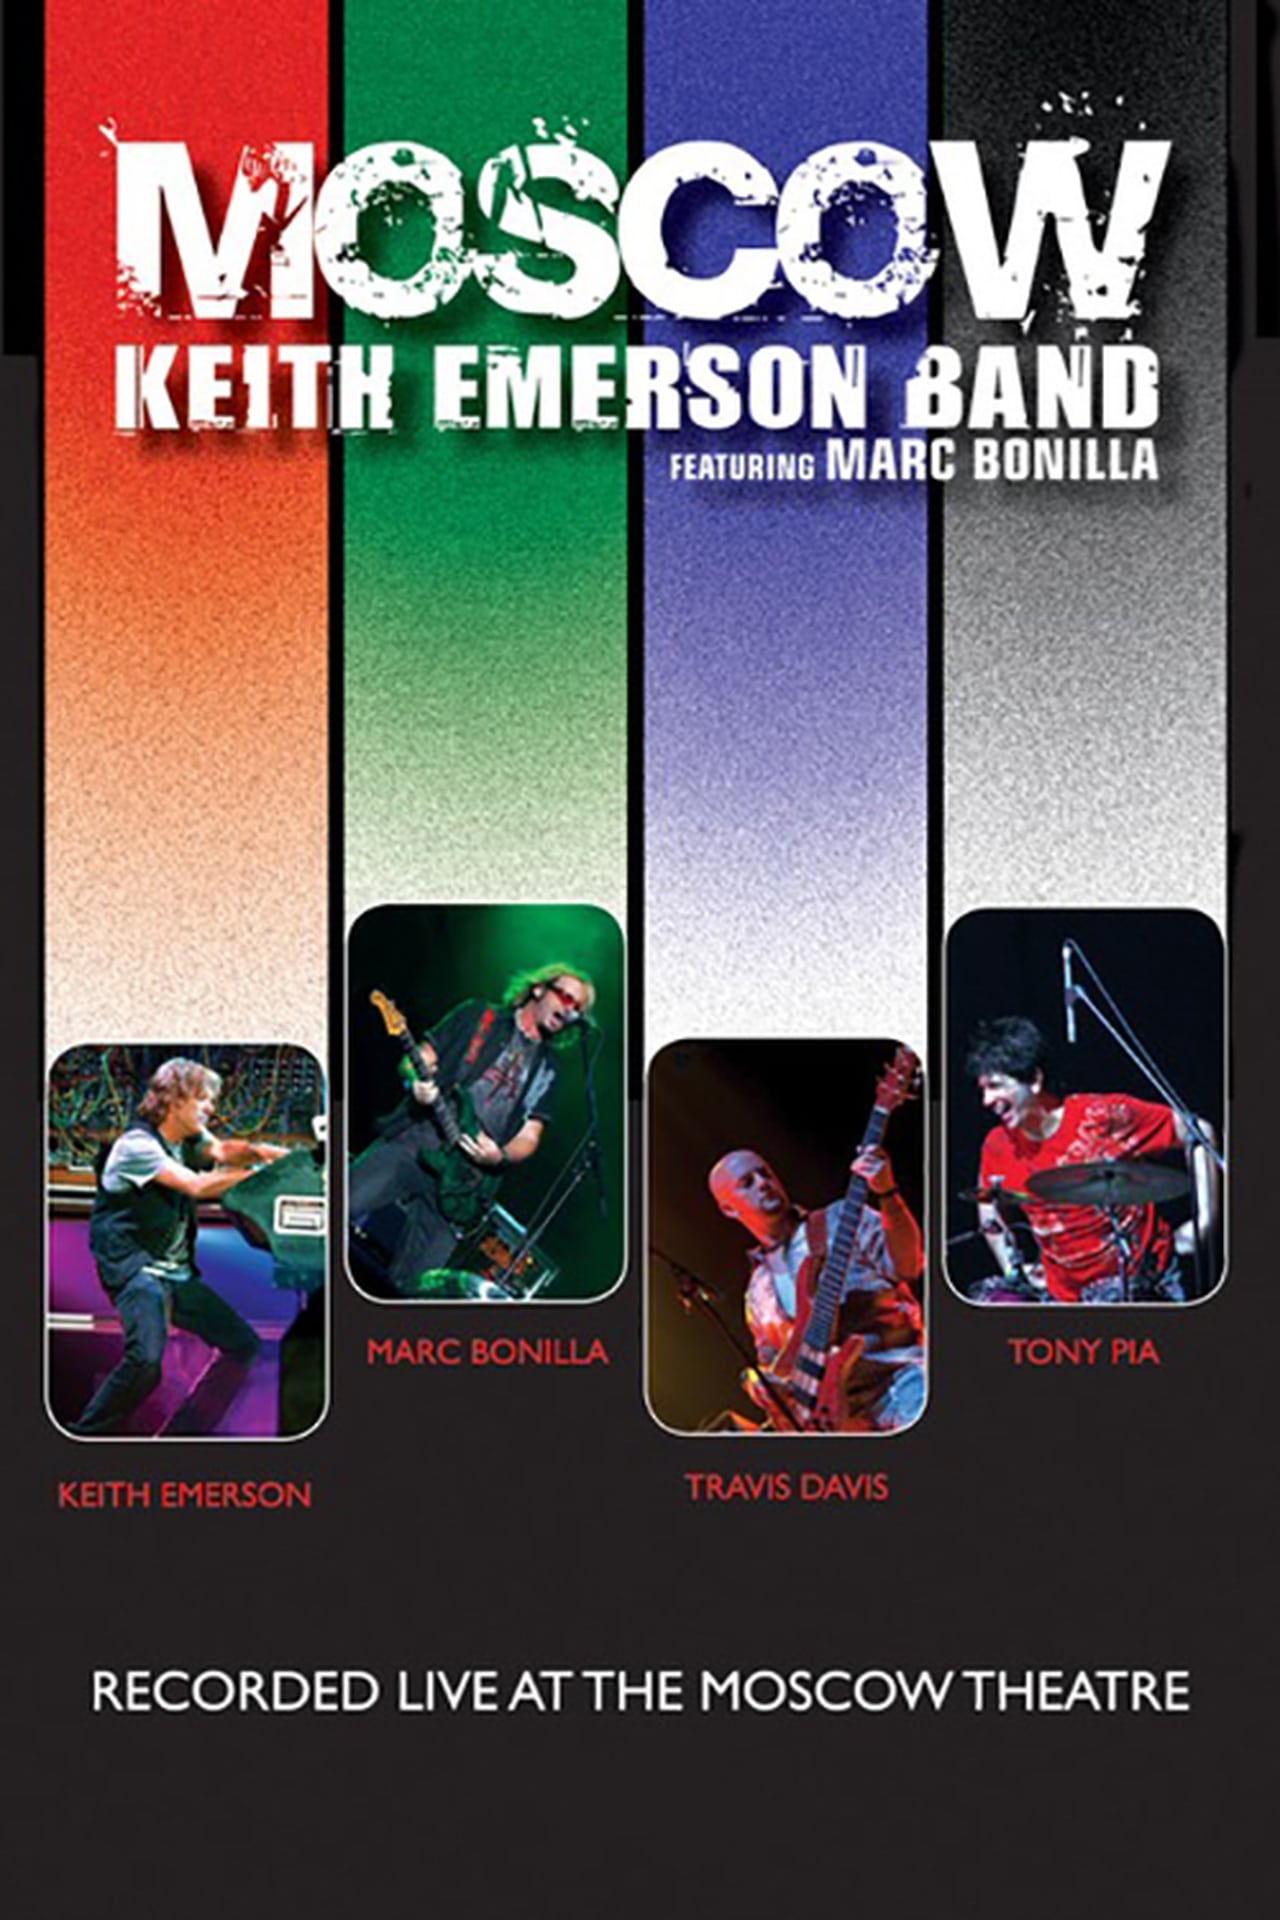 Keith Emerson Band - Moscow Tarkus (2008) DVD